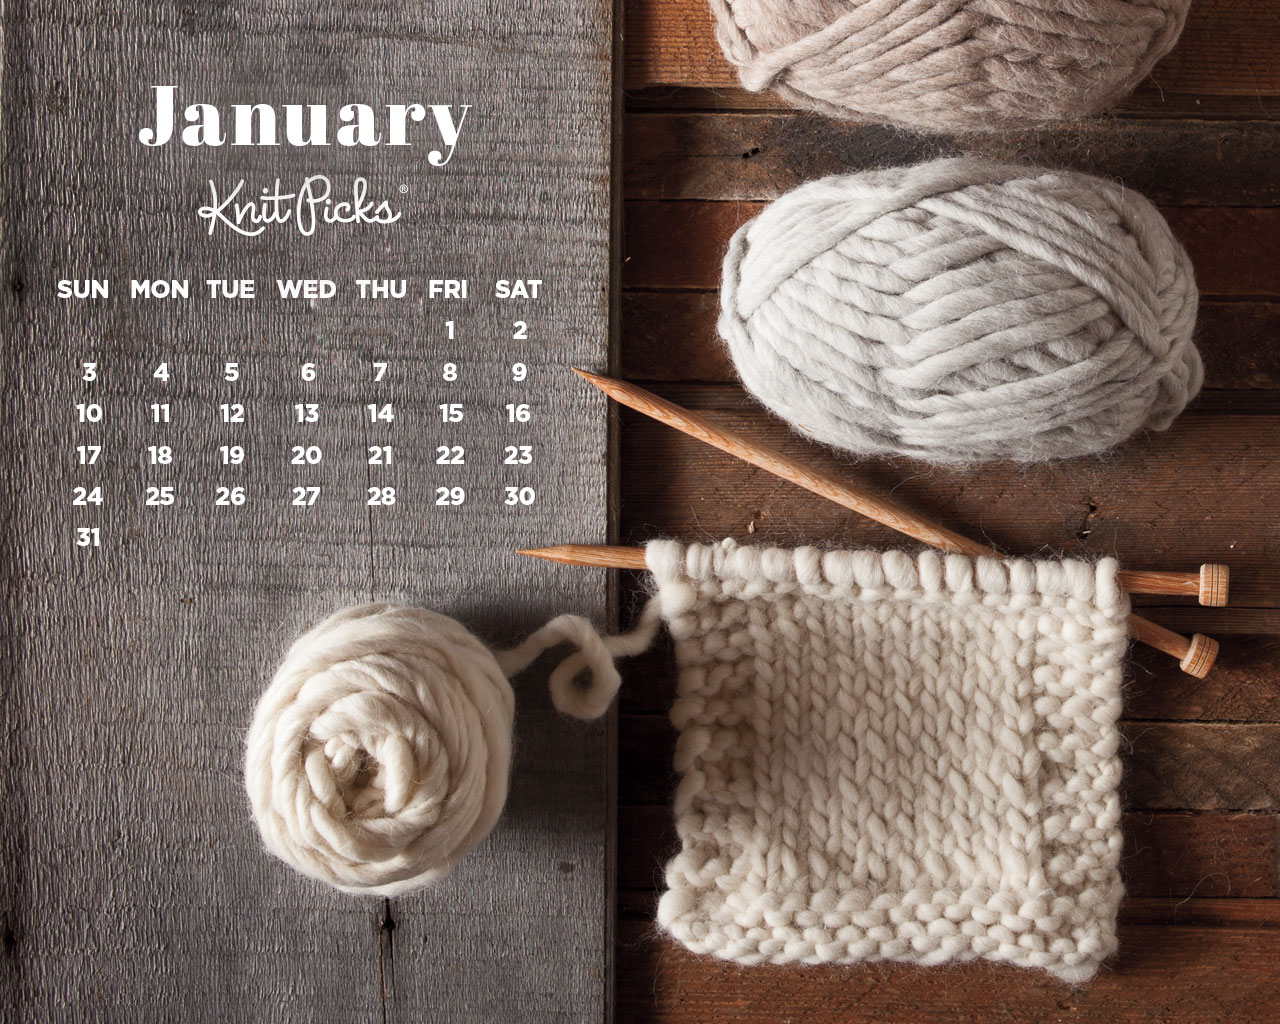 January 2016 Calendar The Knit Picks Staff Knitting Blog